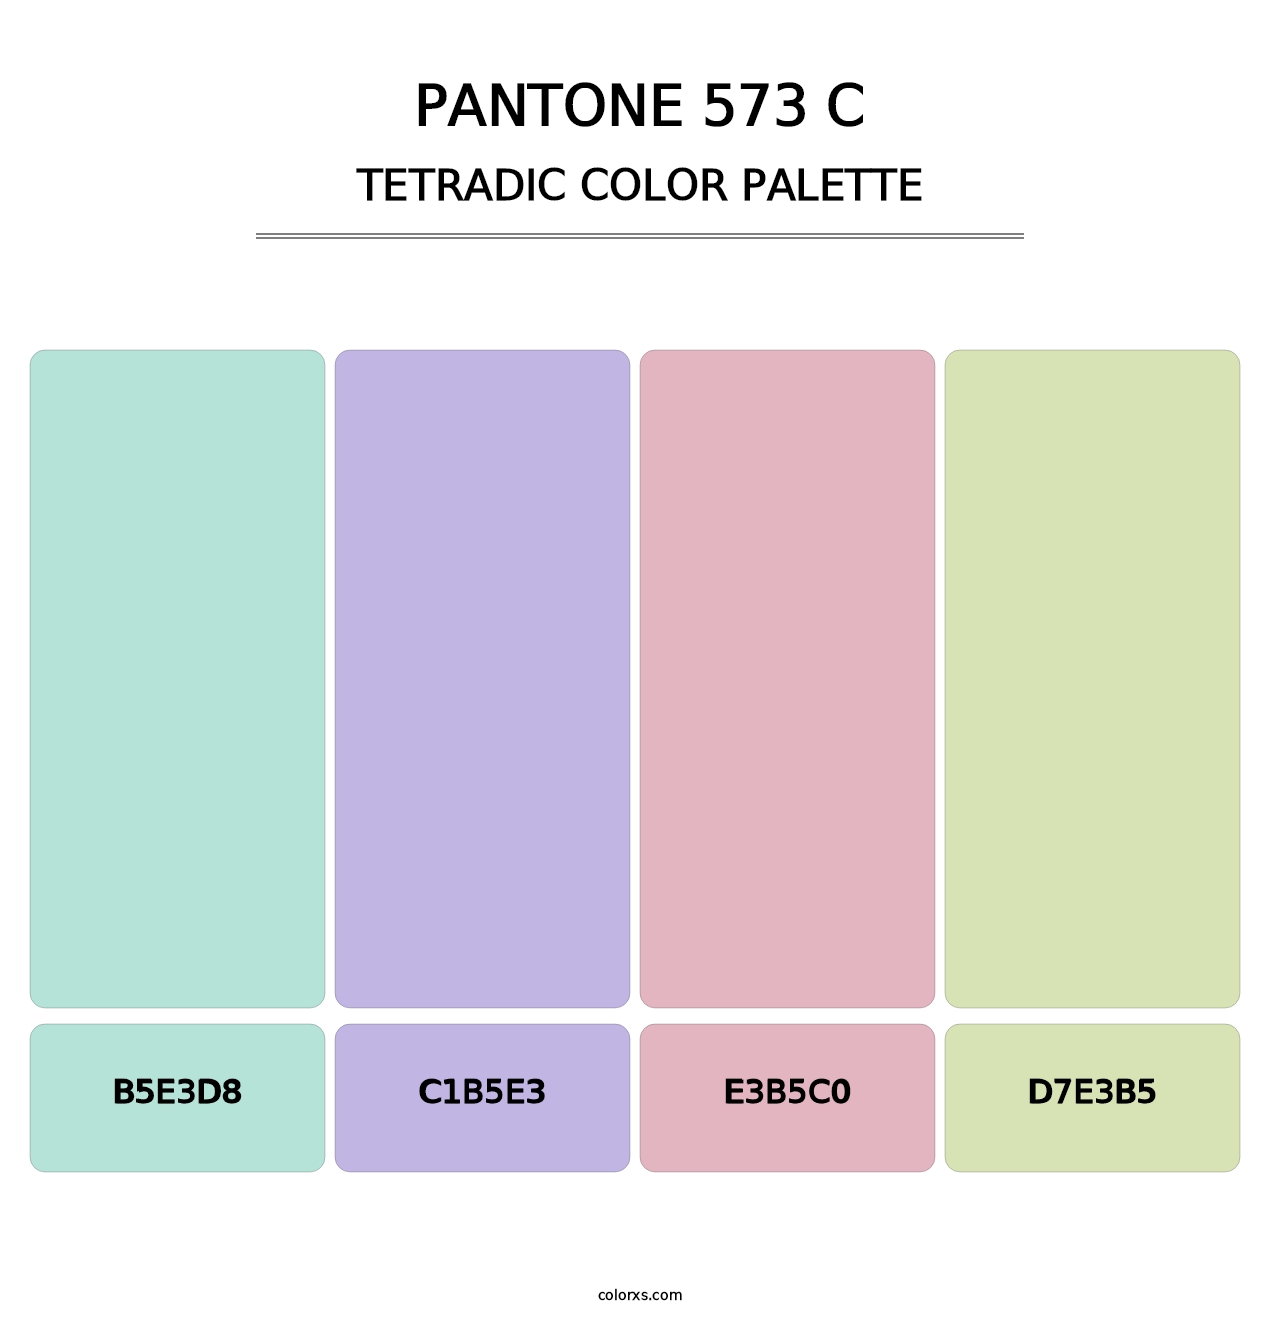 PANTONE 573 C - Tetradic Color Palette